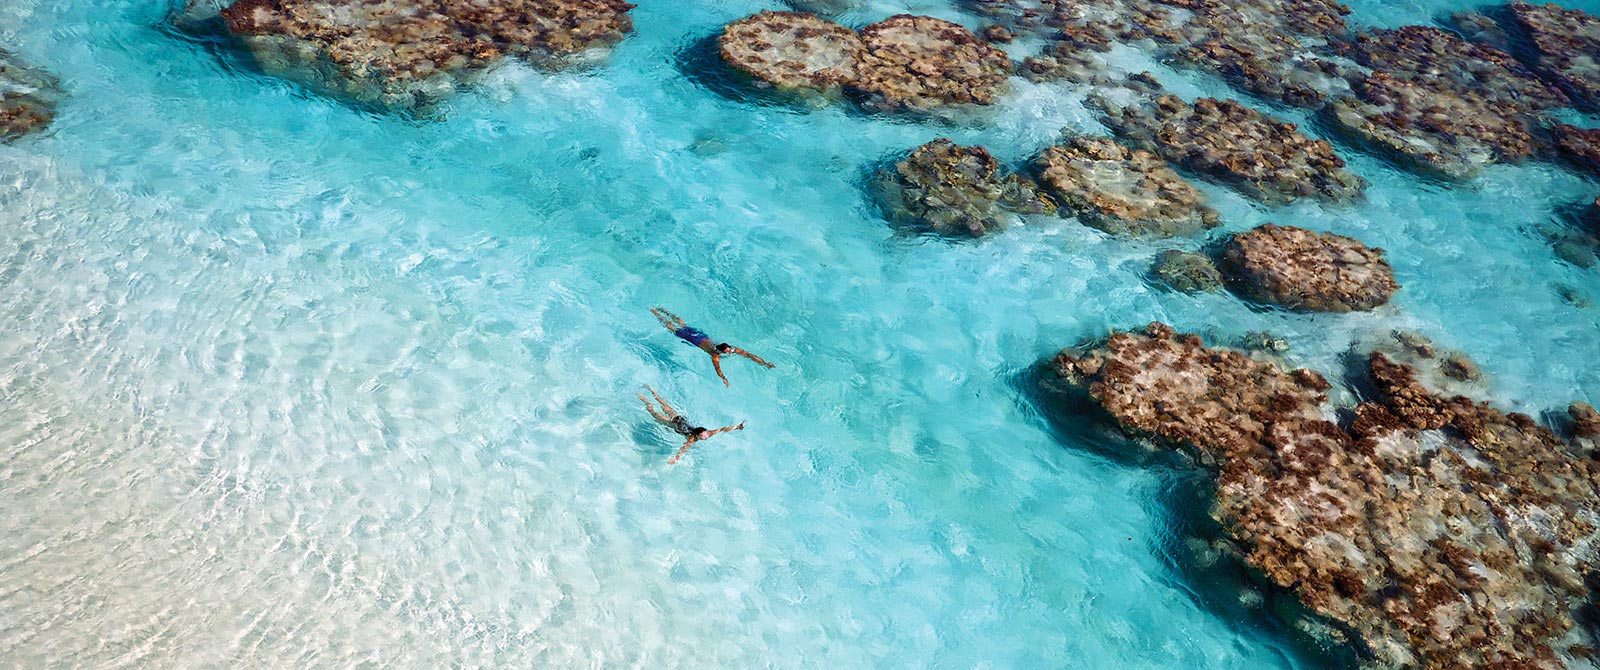 Luxury Tahiti Travel Packages, Honeymoons, and Overwater Bungalows